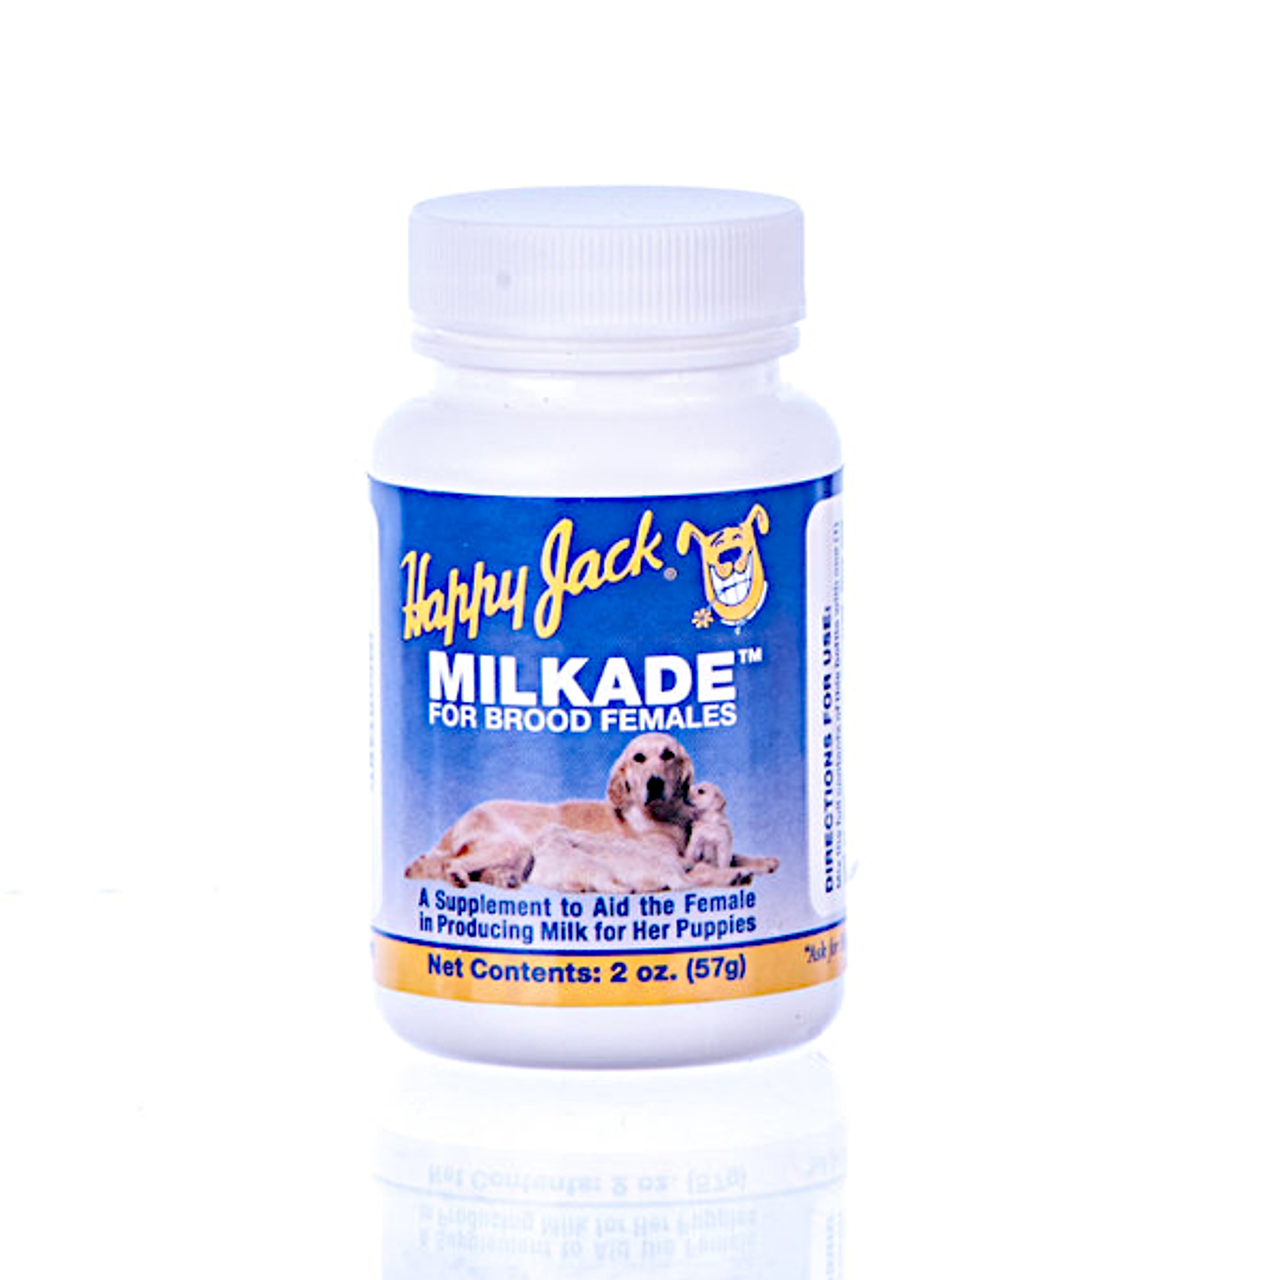 happy jack milkade - helps female produce milk - at okie dog supply